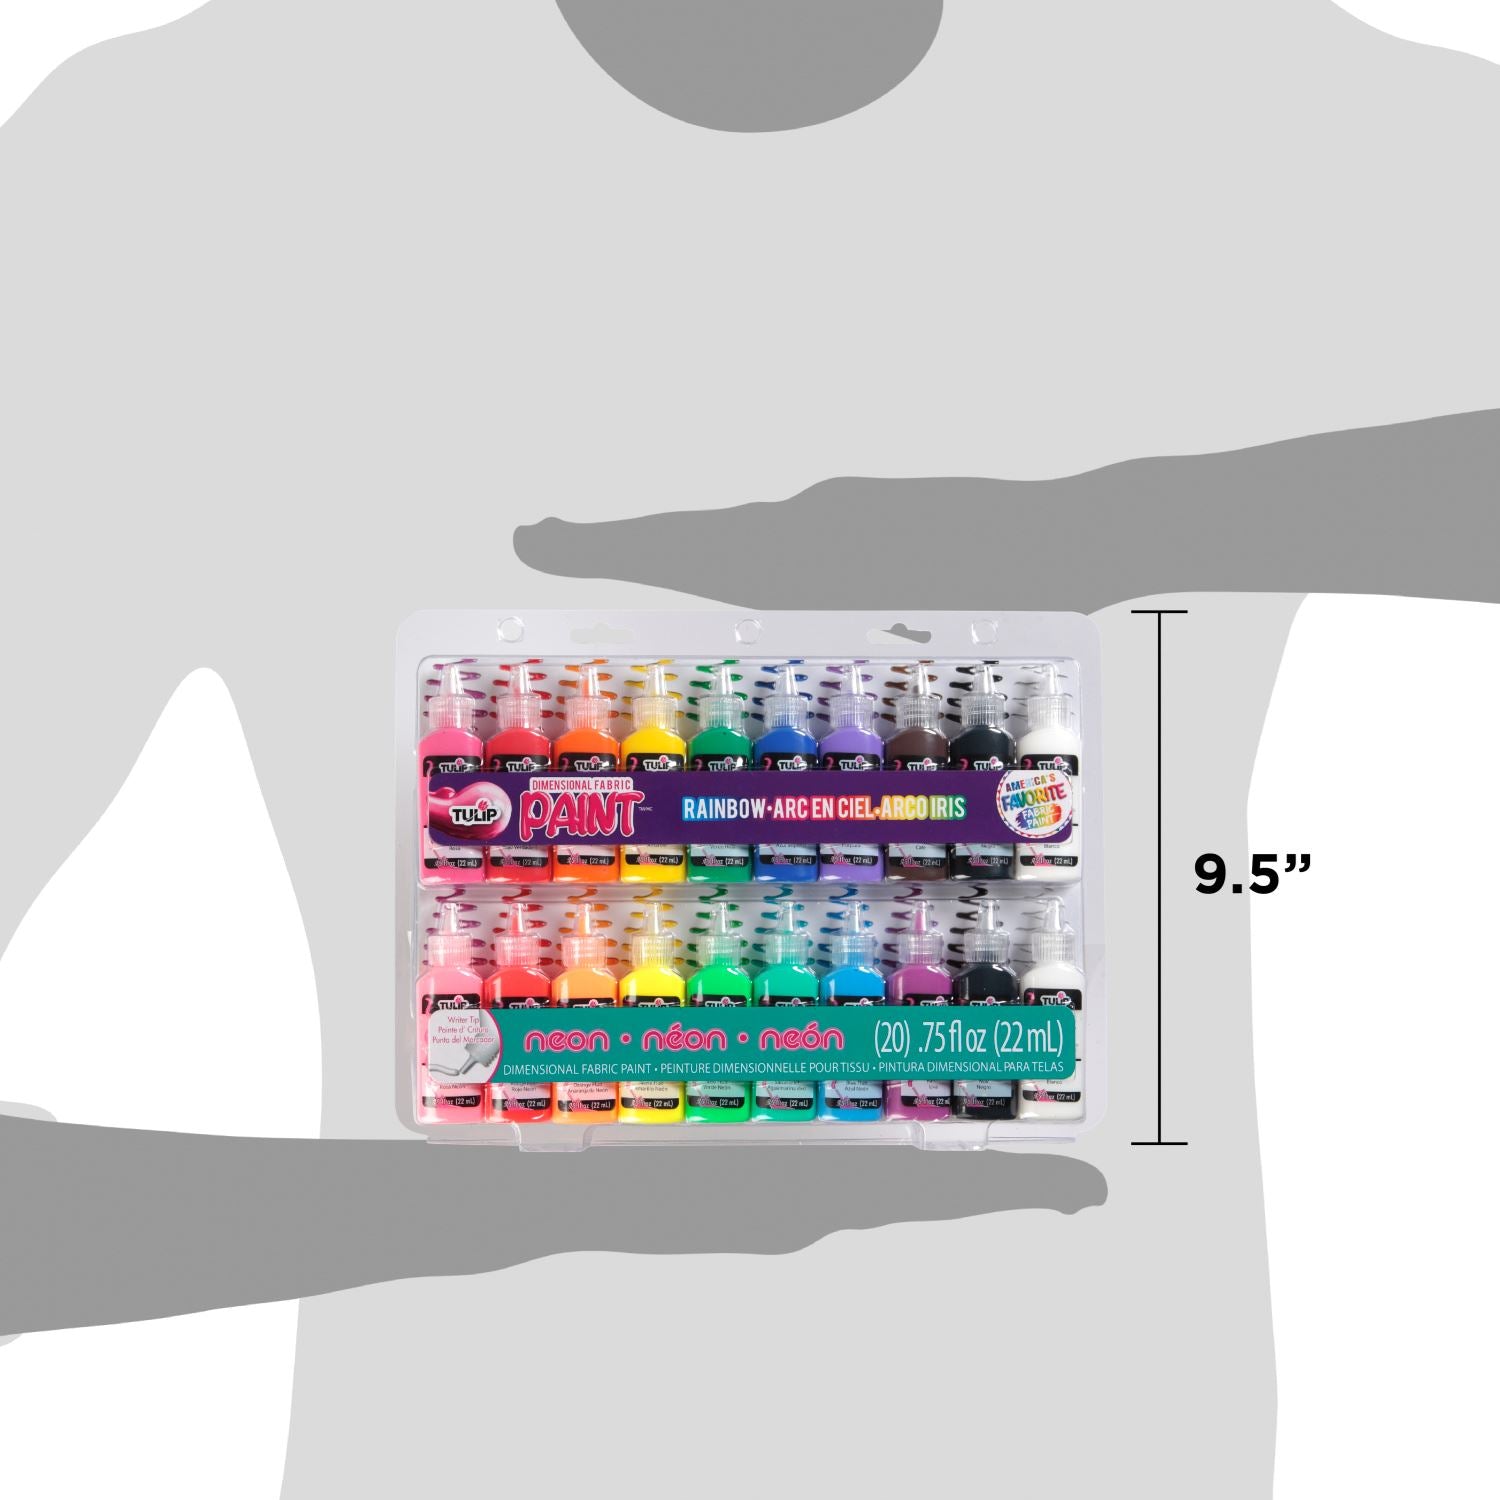 Tulip Dimensional Fabric Paint Set - Rainbow 20-Pack